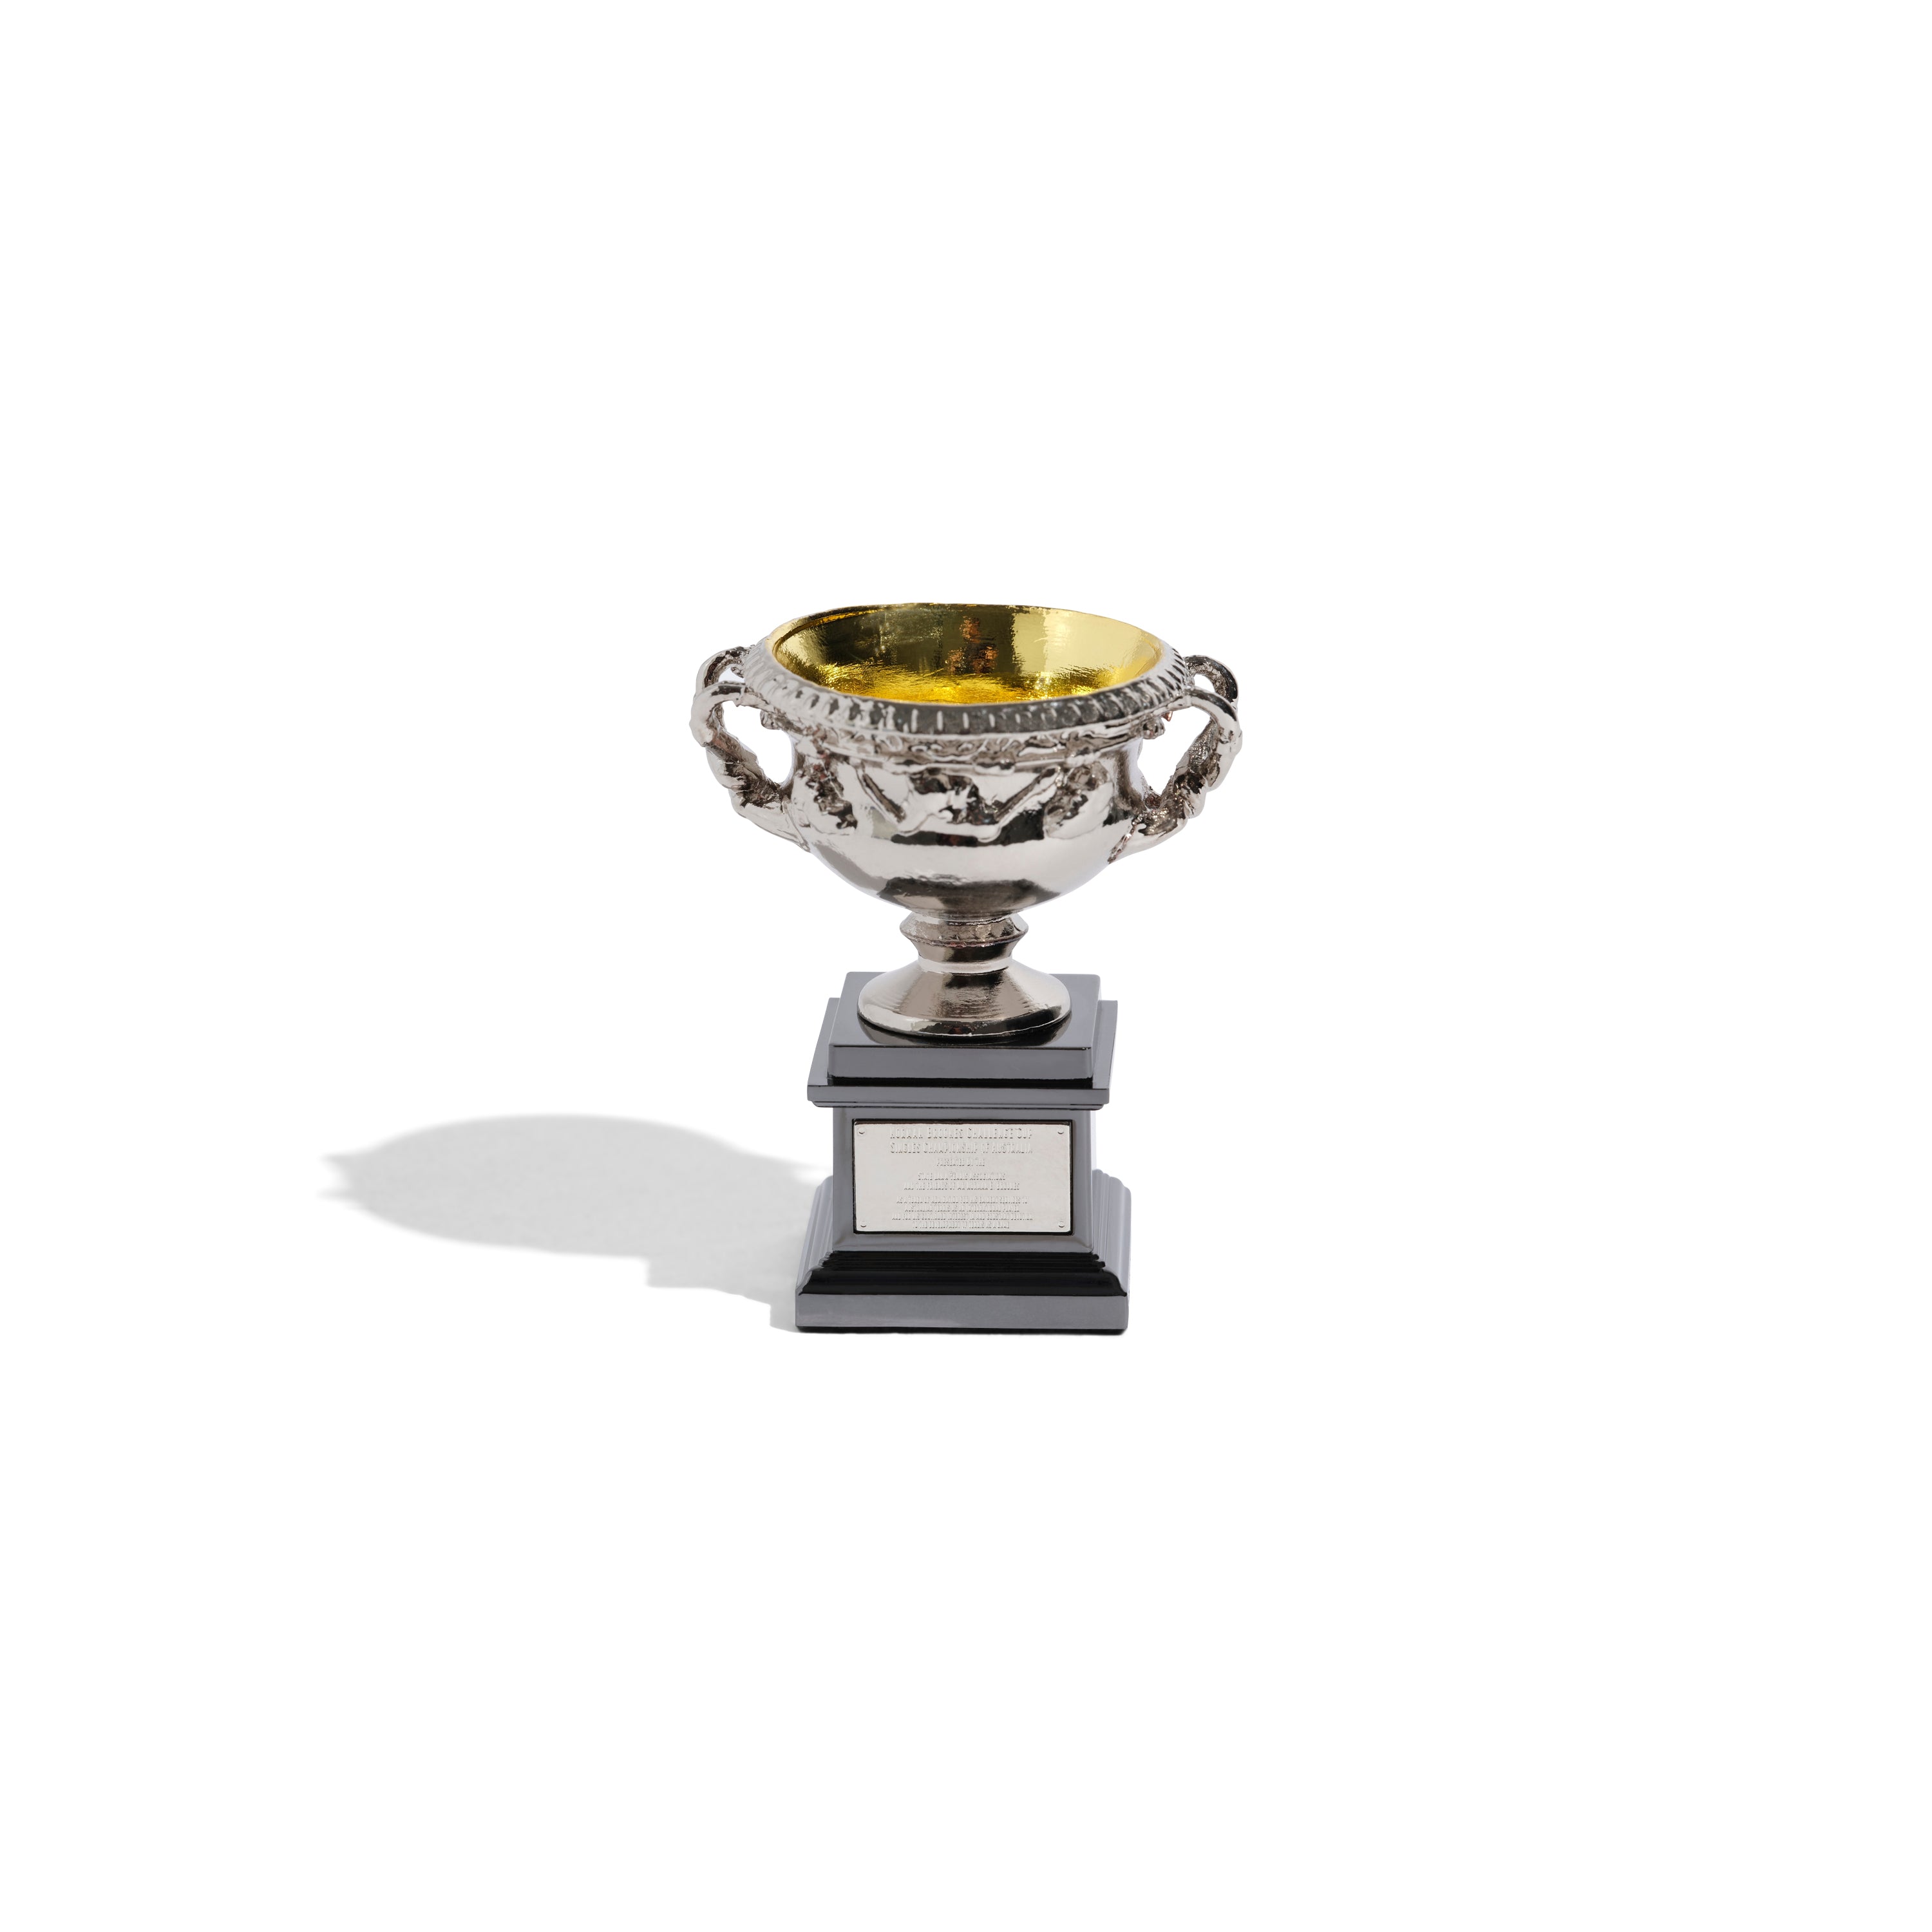 Miniature Men's Trophy